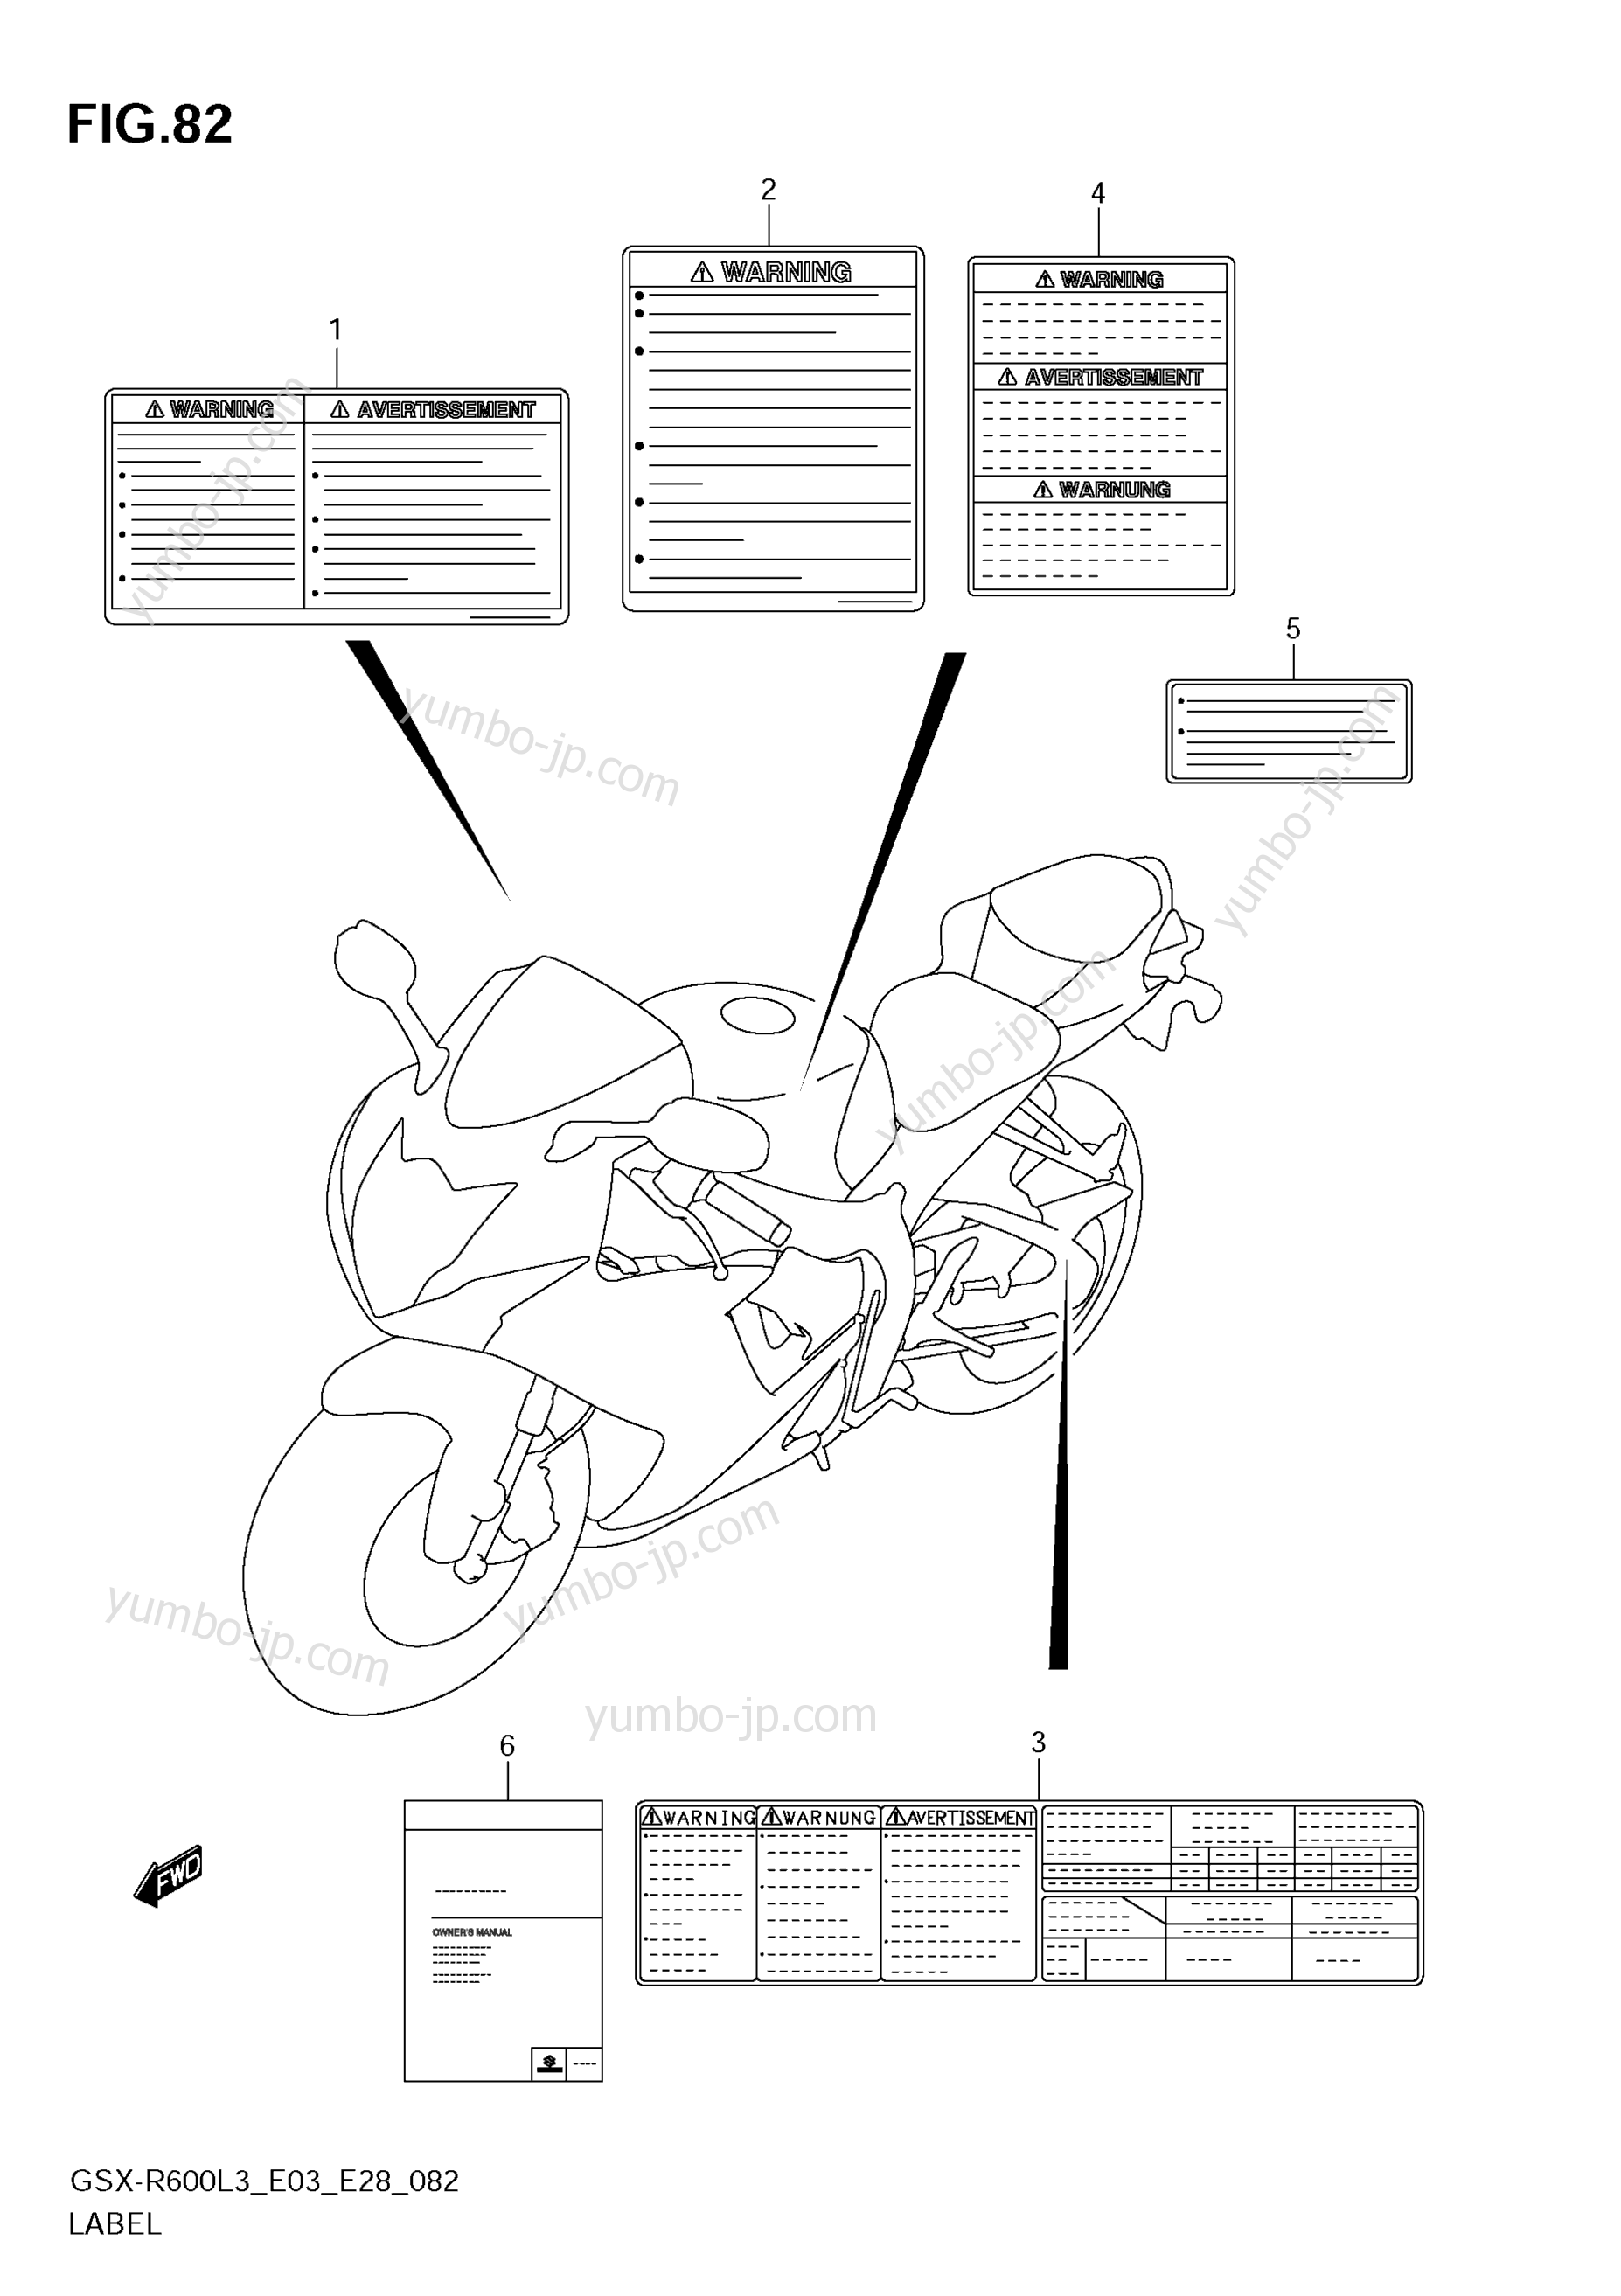 LABEL (GSX-R600L3 E28) for motorcycles SUZUKI GSX-R600 2013 year